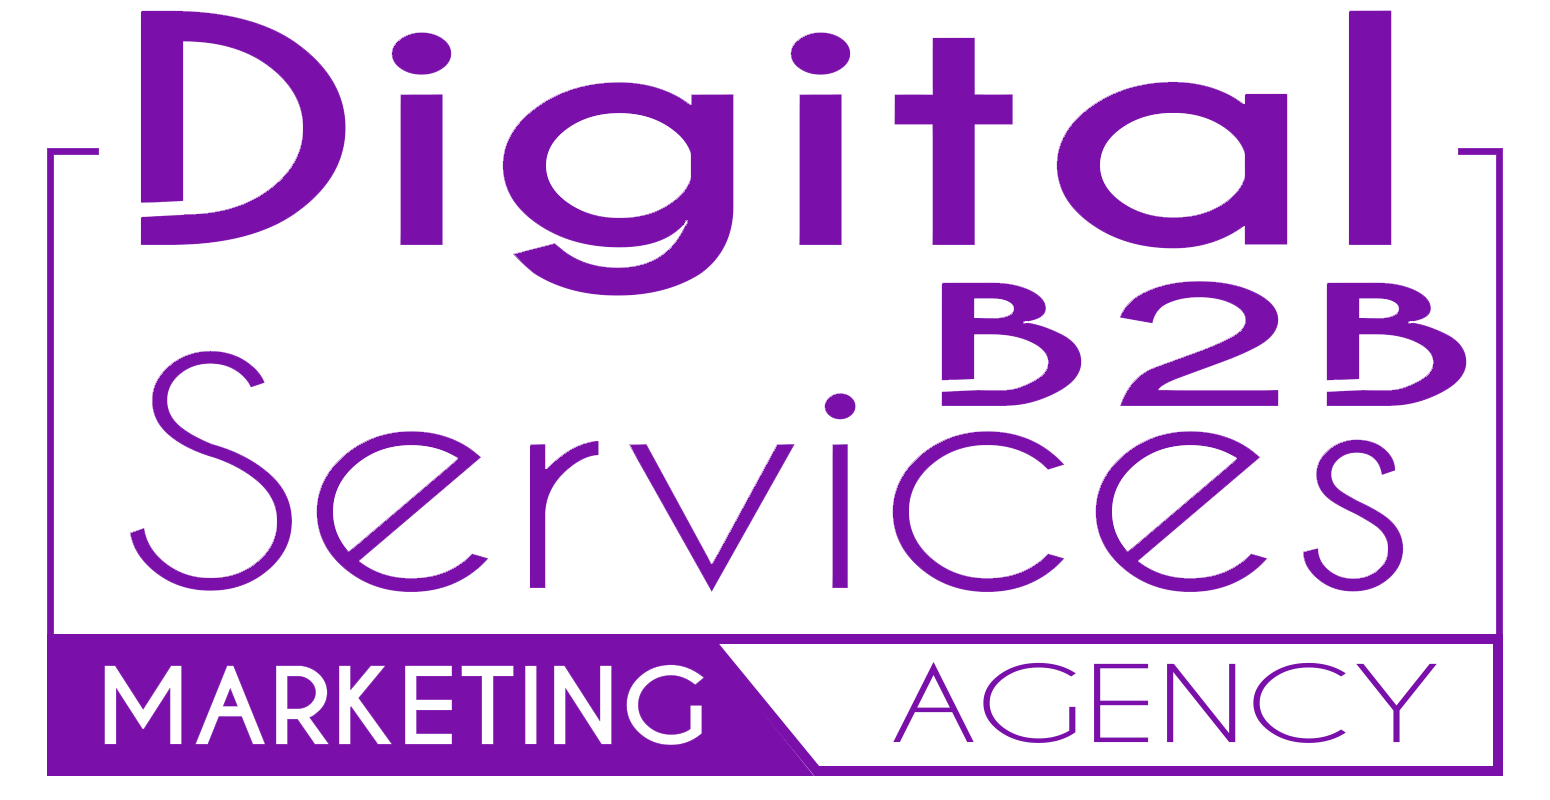 Digital B2B Services Limited